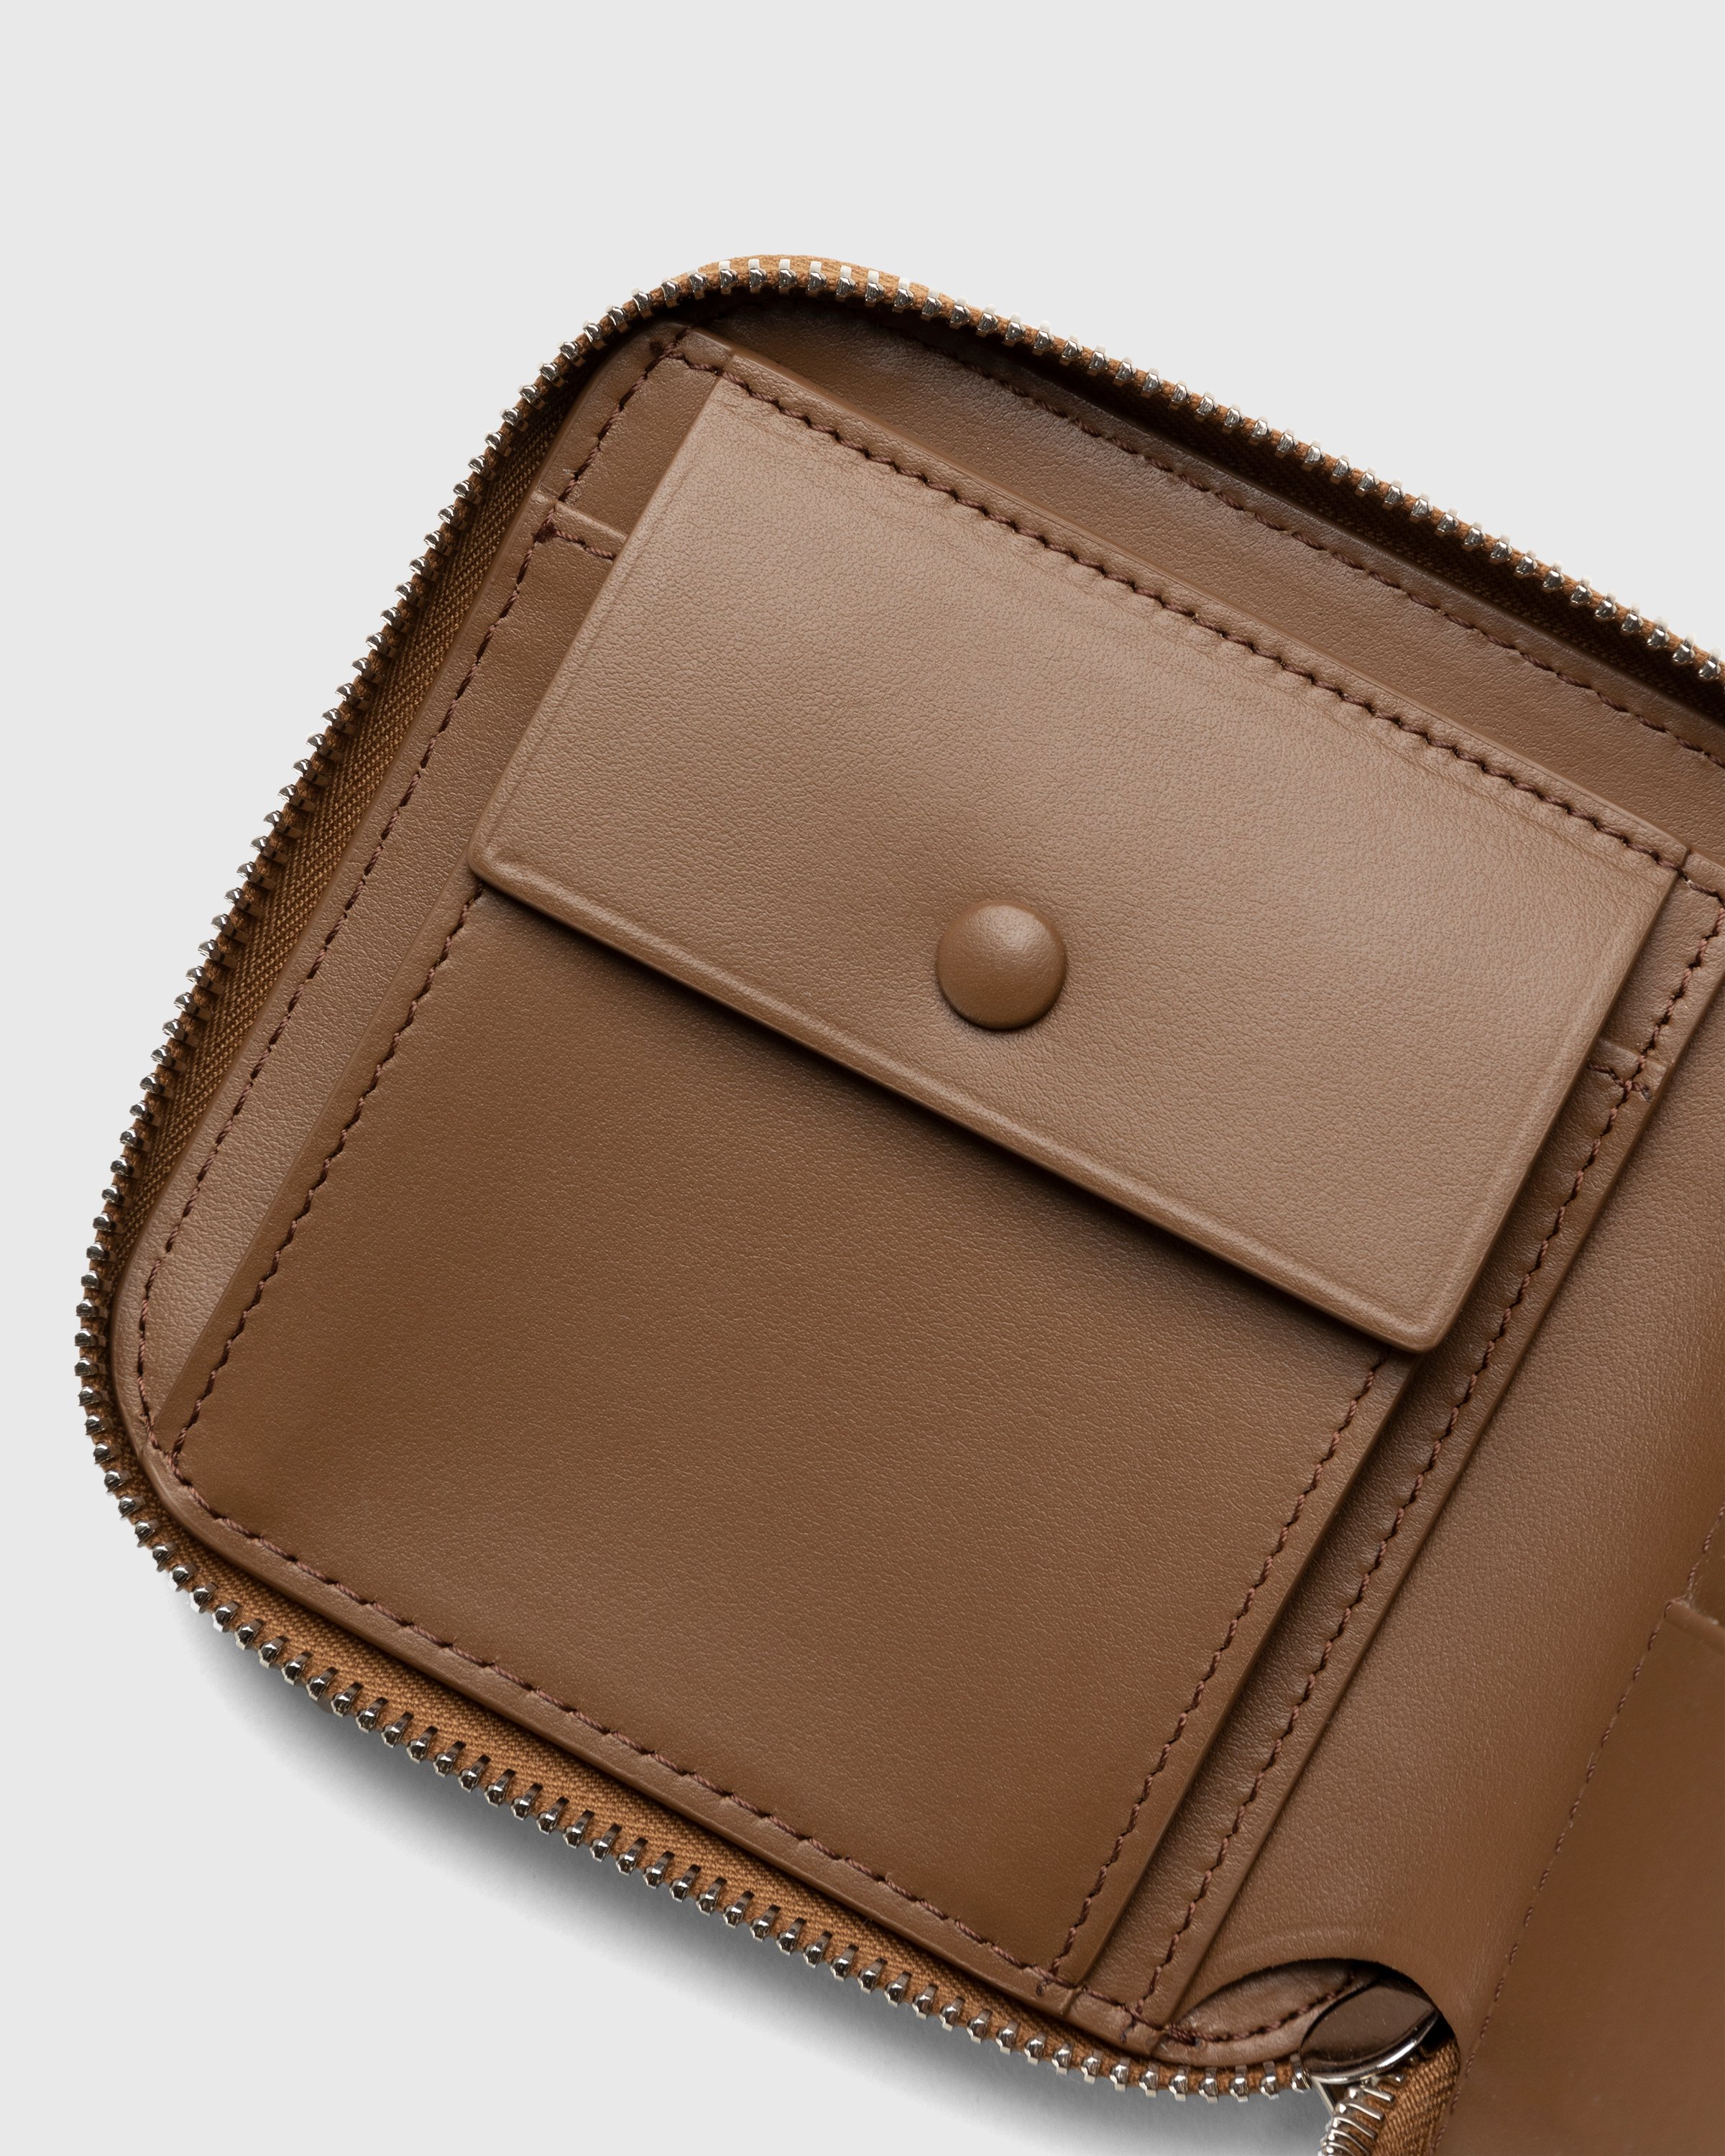 Acne Studios - Leather Zip Wallet Brown - Accessories - Brown - Image 4